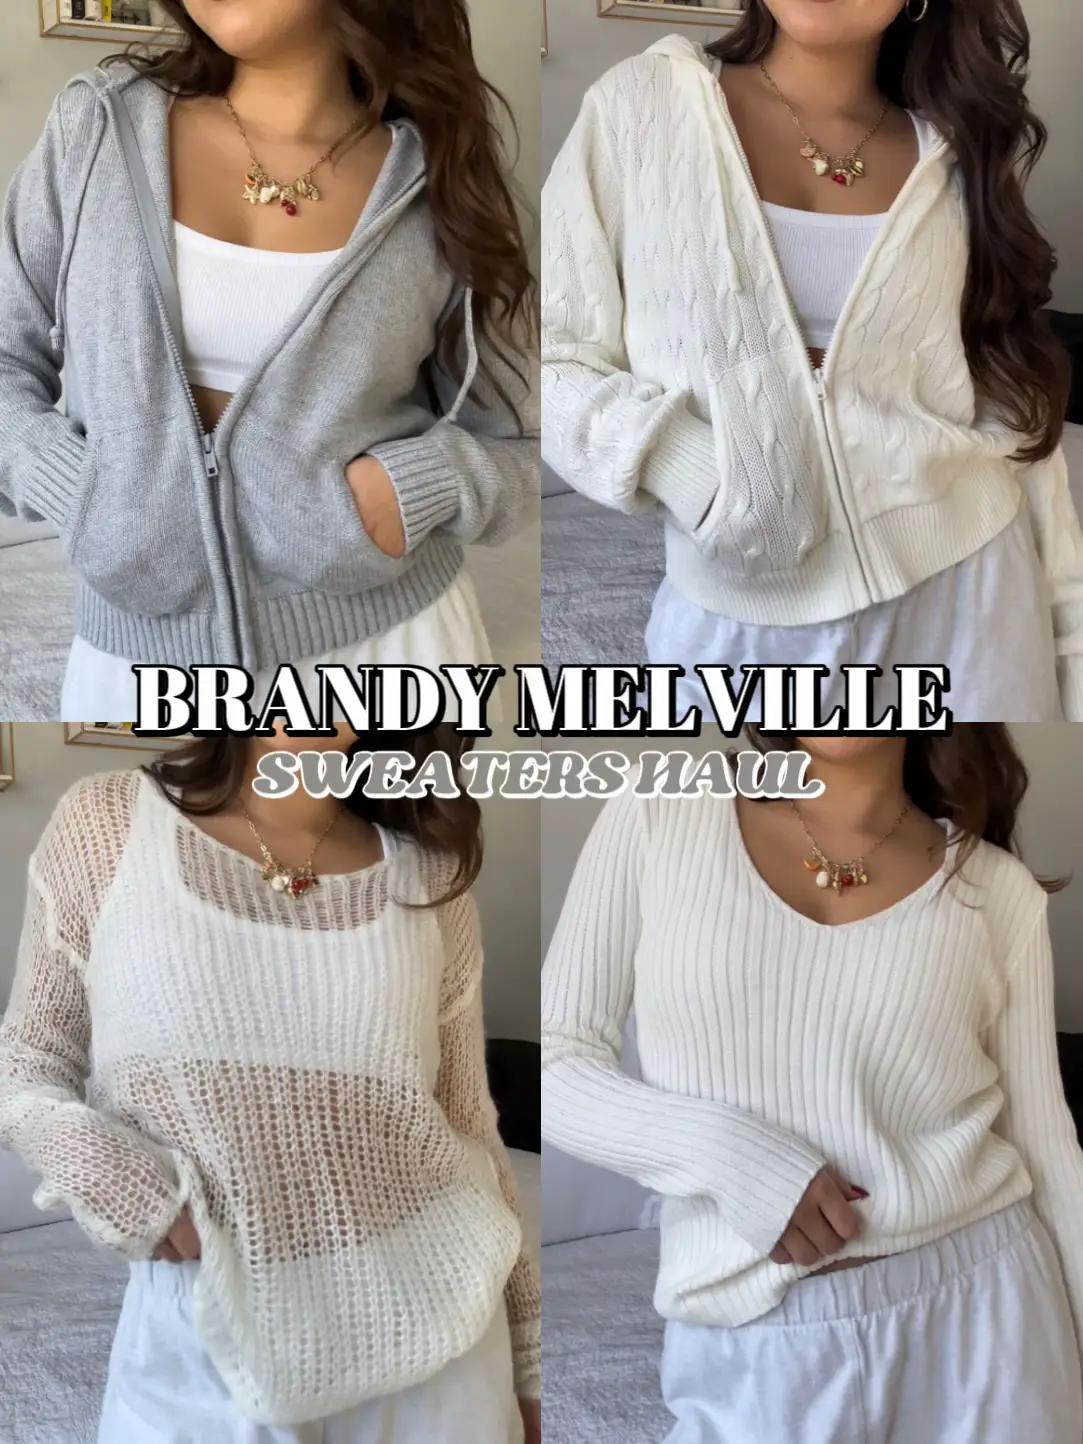 Brandy Melville, Sweaters